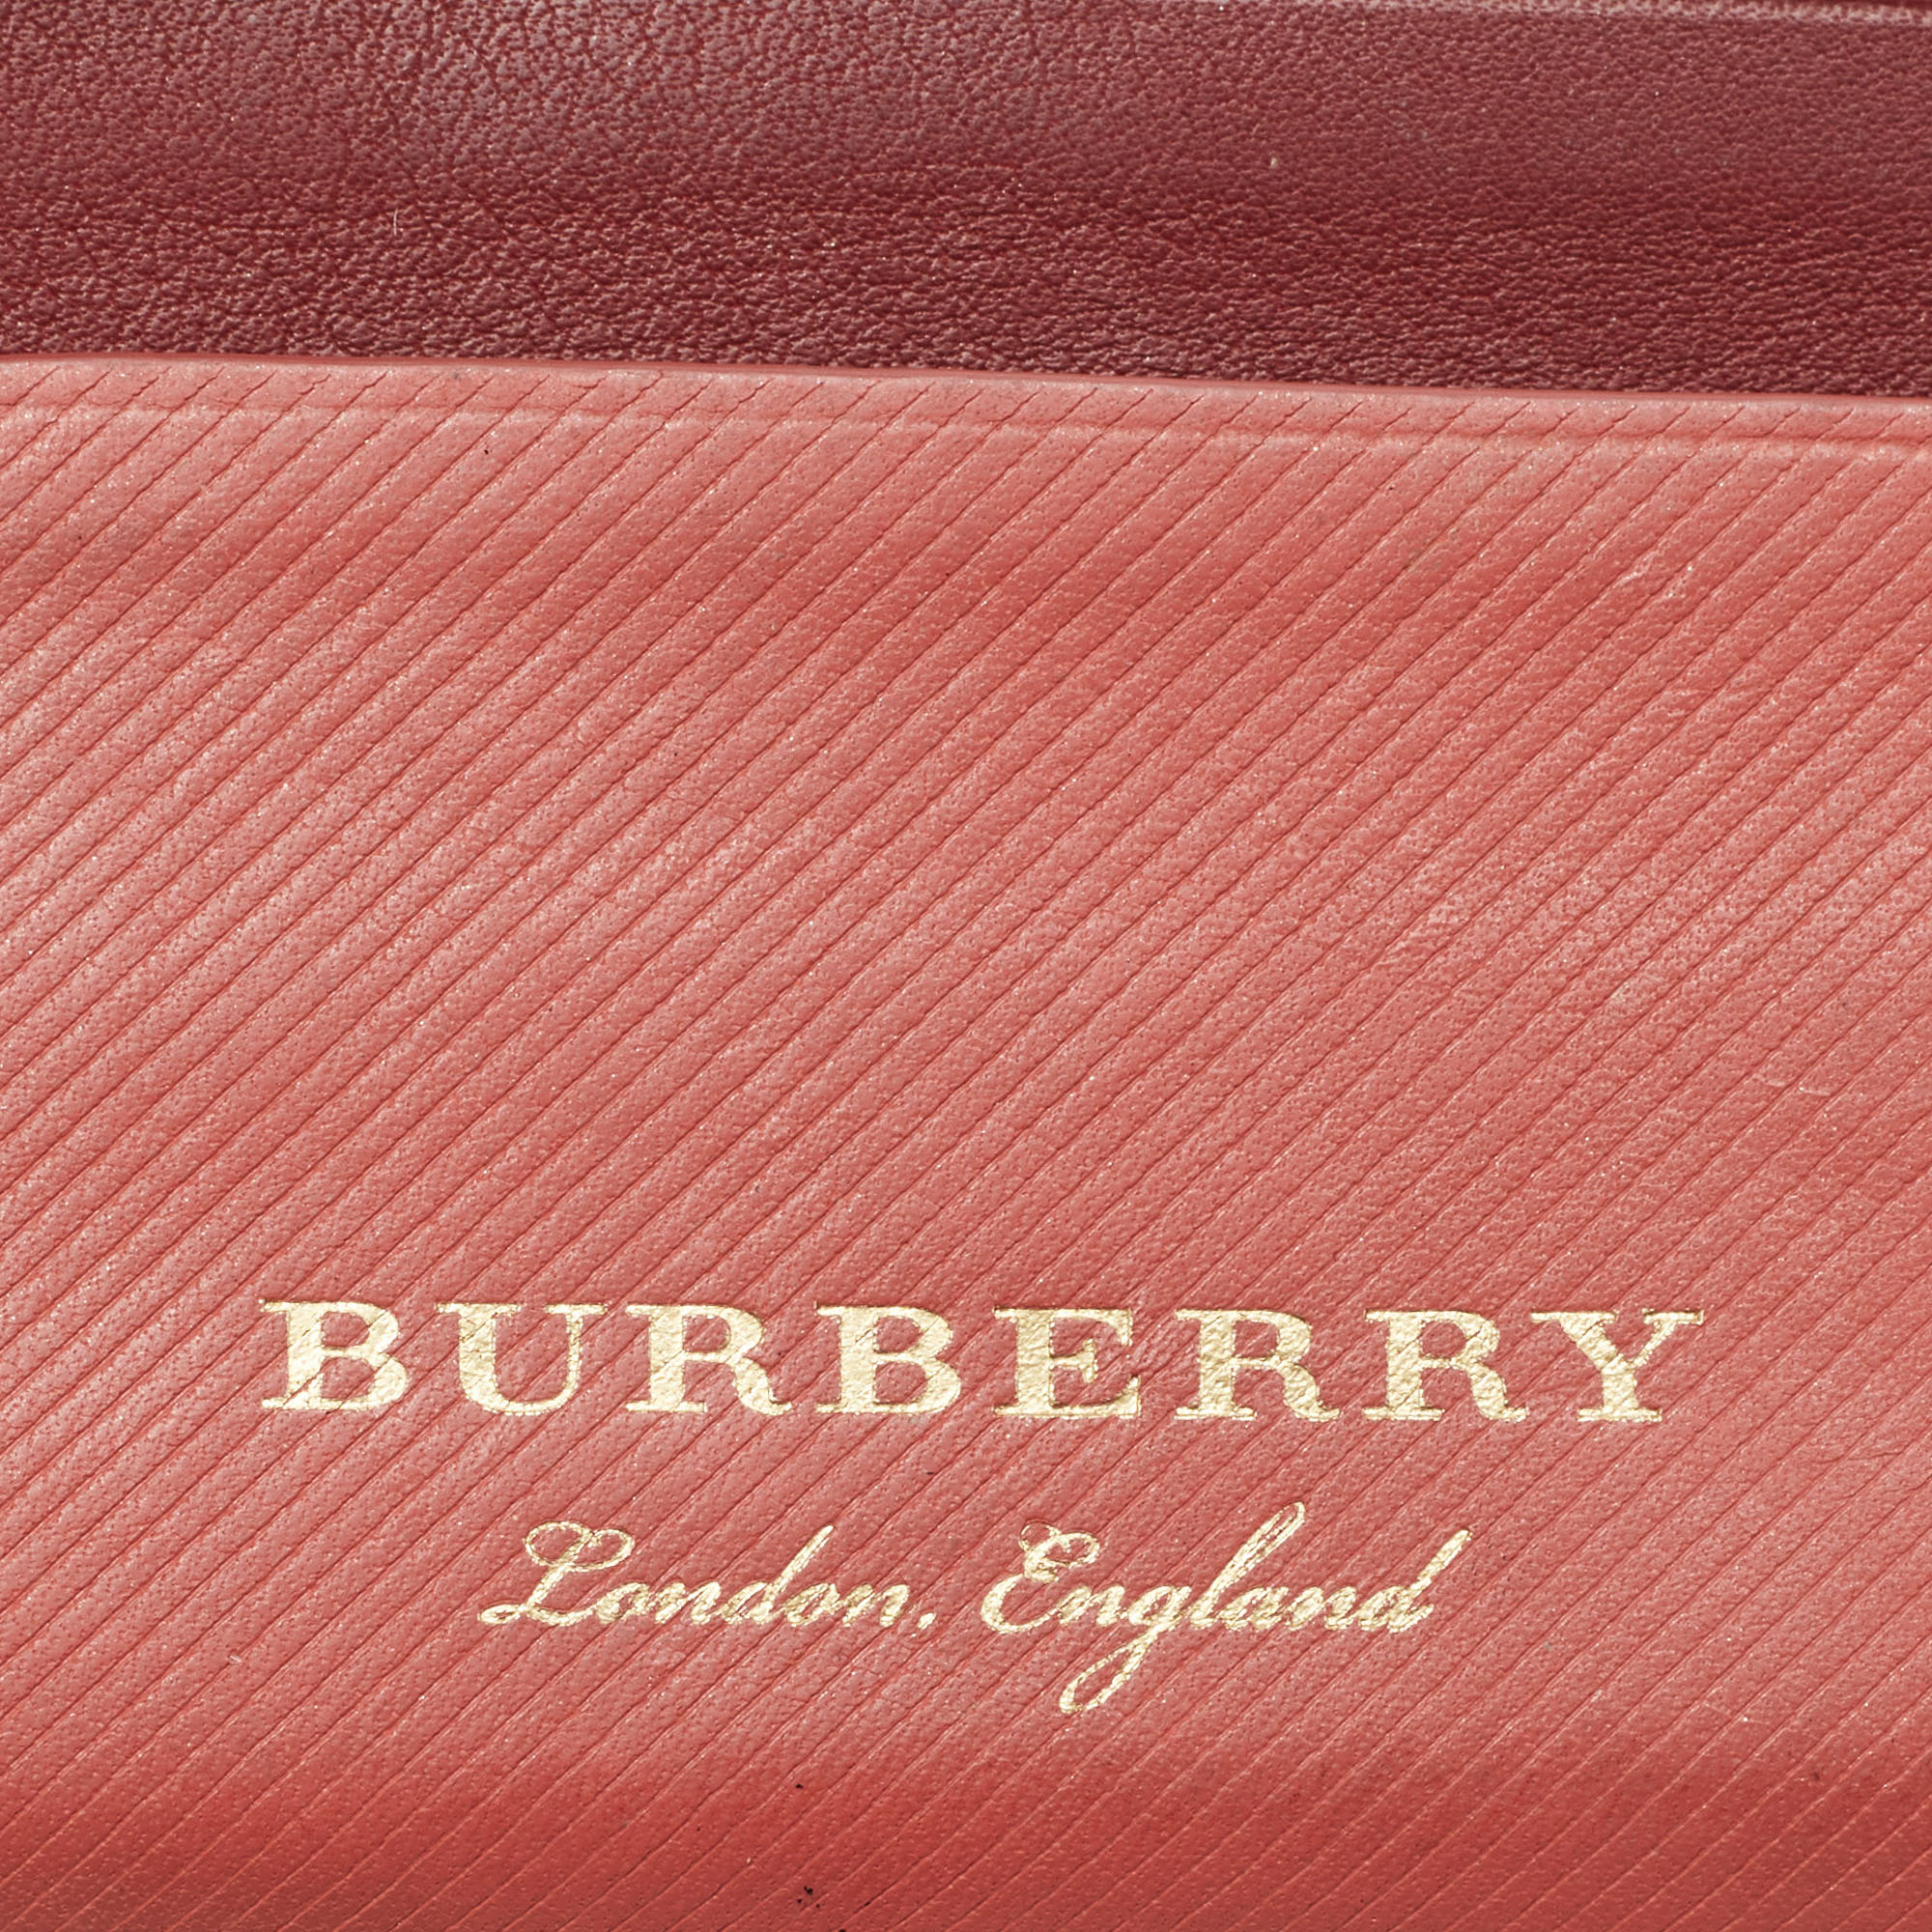 Burberry Burgundy/Light Red Leather Card Holder